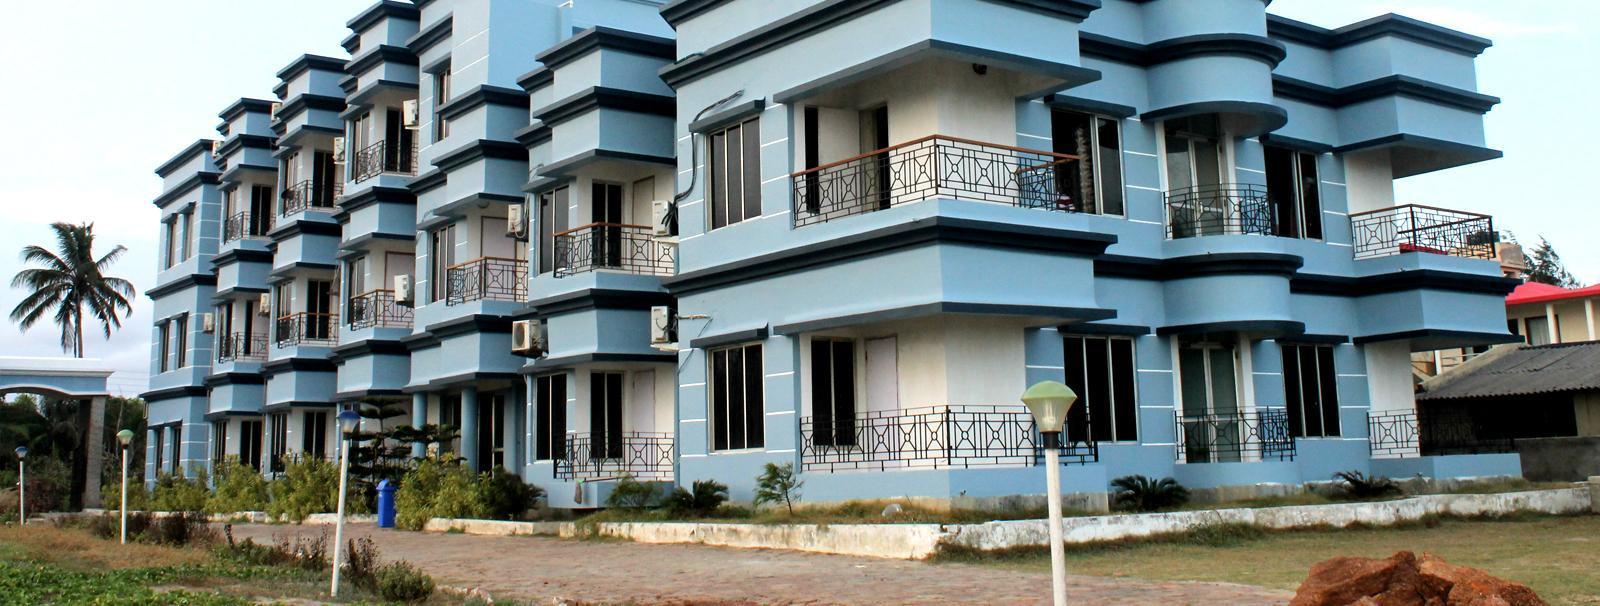 Oyo 29215 Hotel Arya Palace - Puri